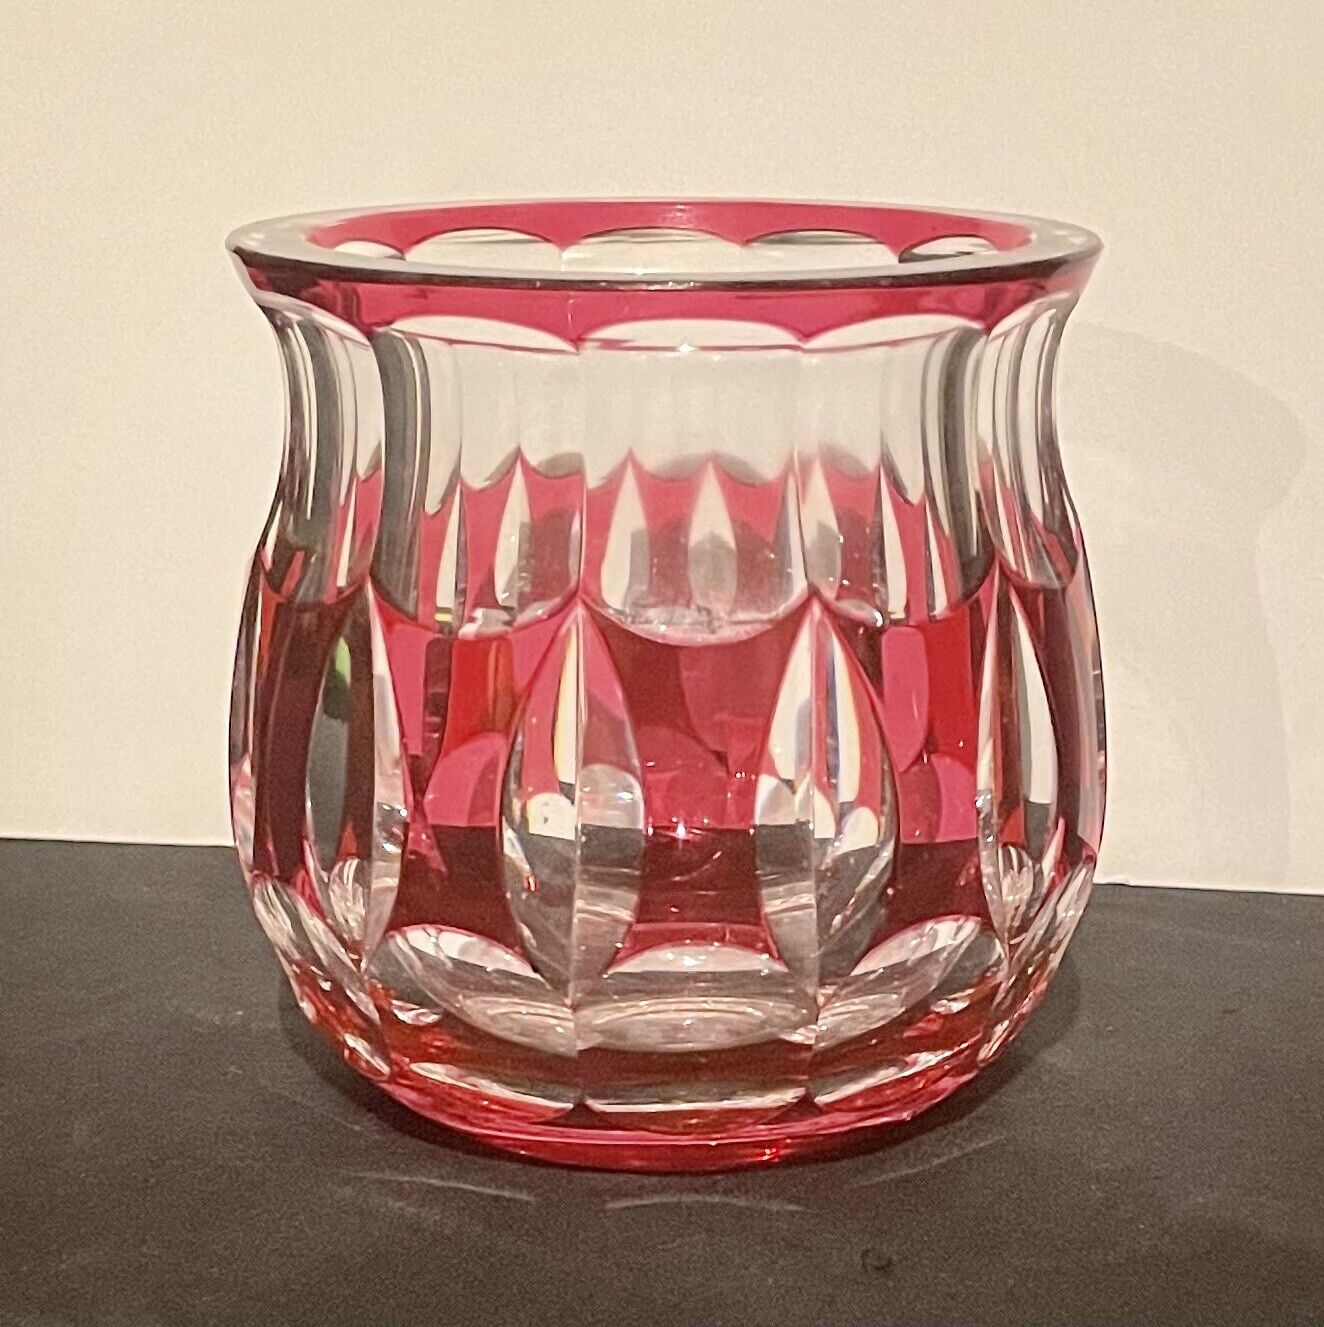 Signed Vintage Van Saint Lambert Art Deco CRYSTAL GLASS Vase Belgium c1930's